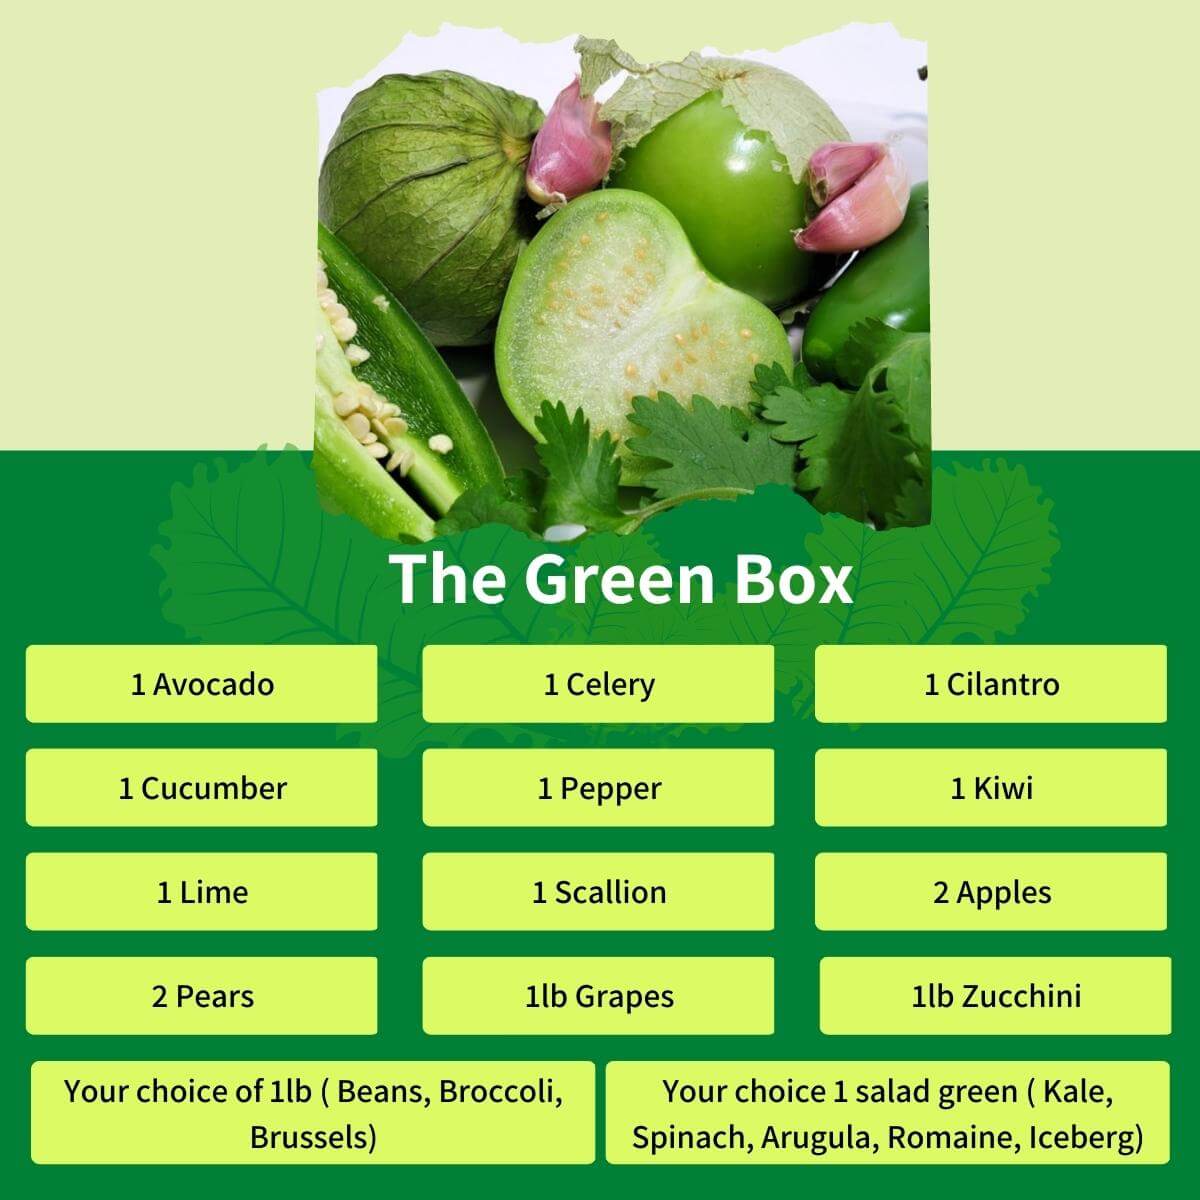 The Green Box